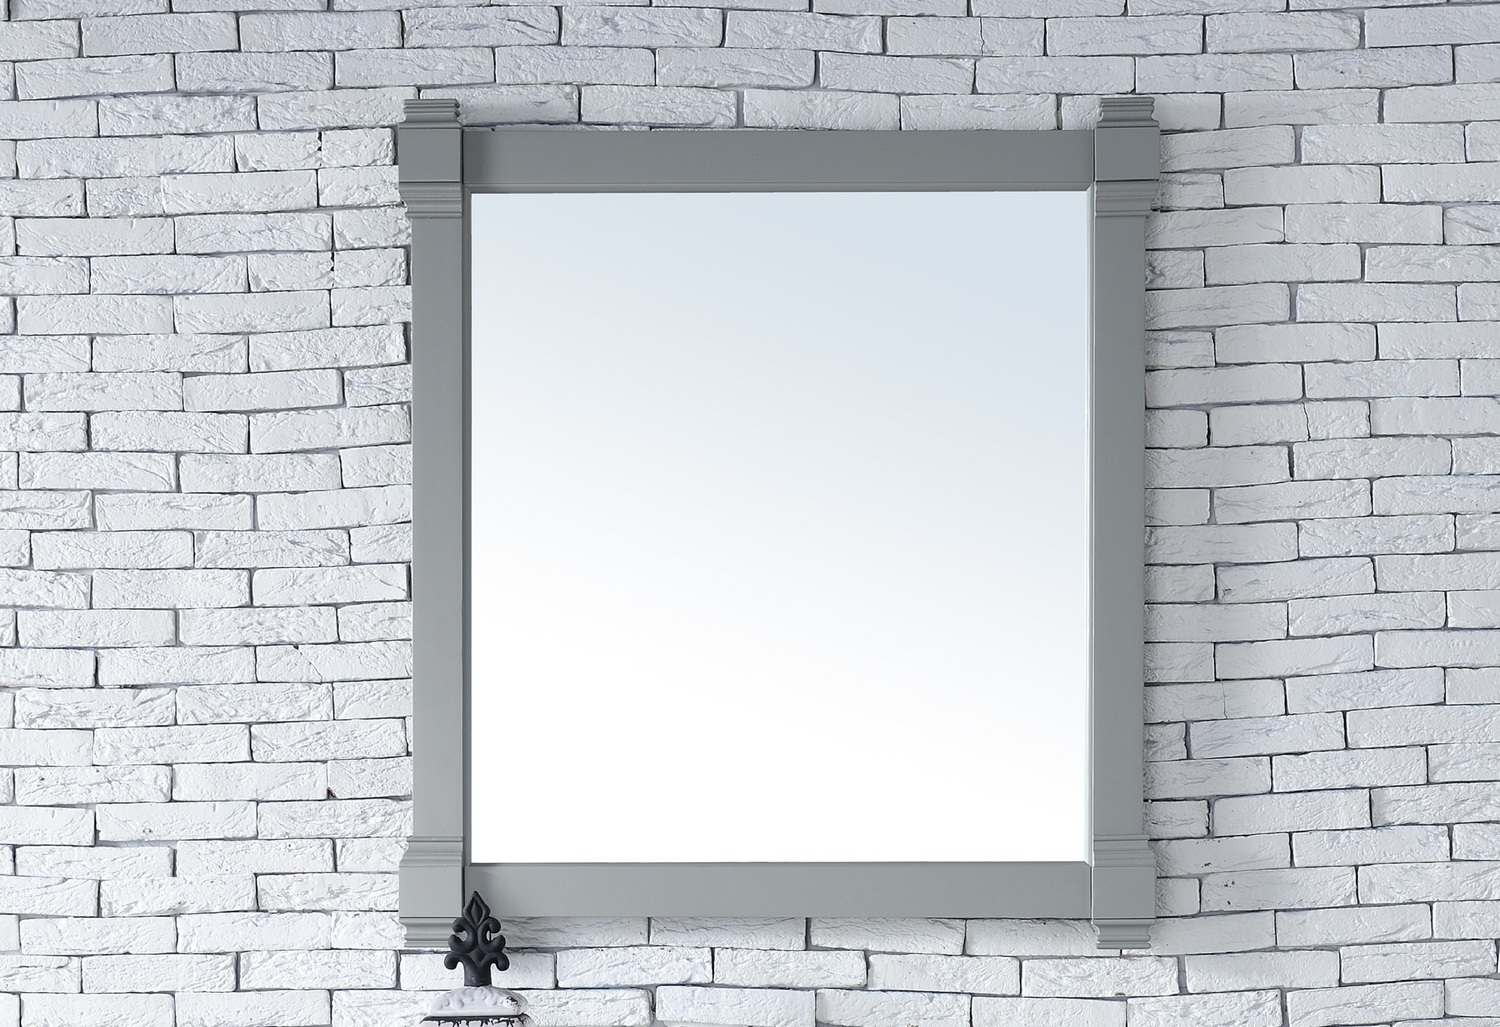  James Martin Mirror Bathroom Mirrors Transitional, Traditional